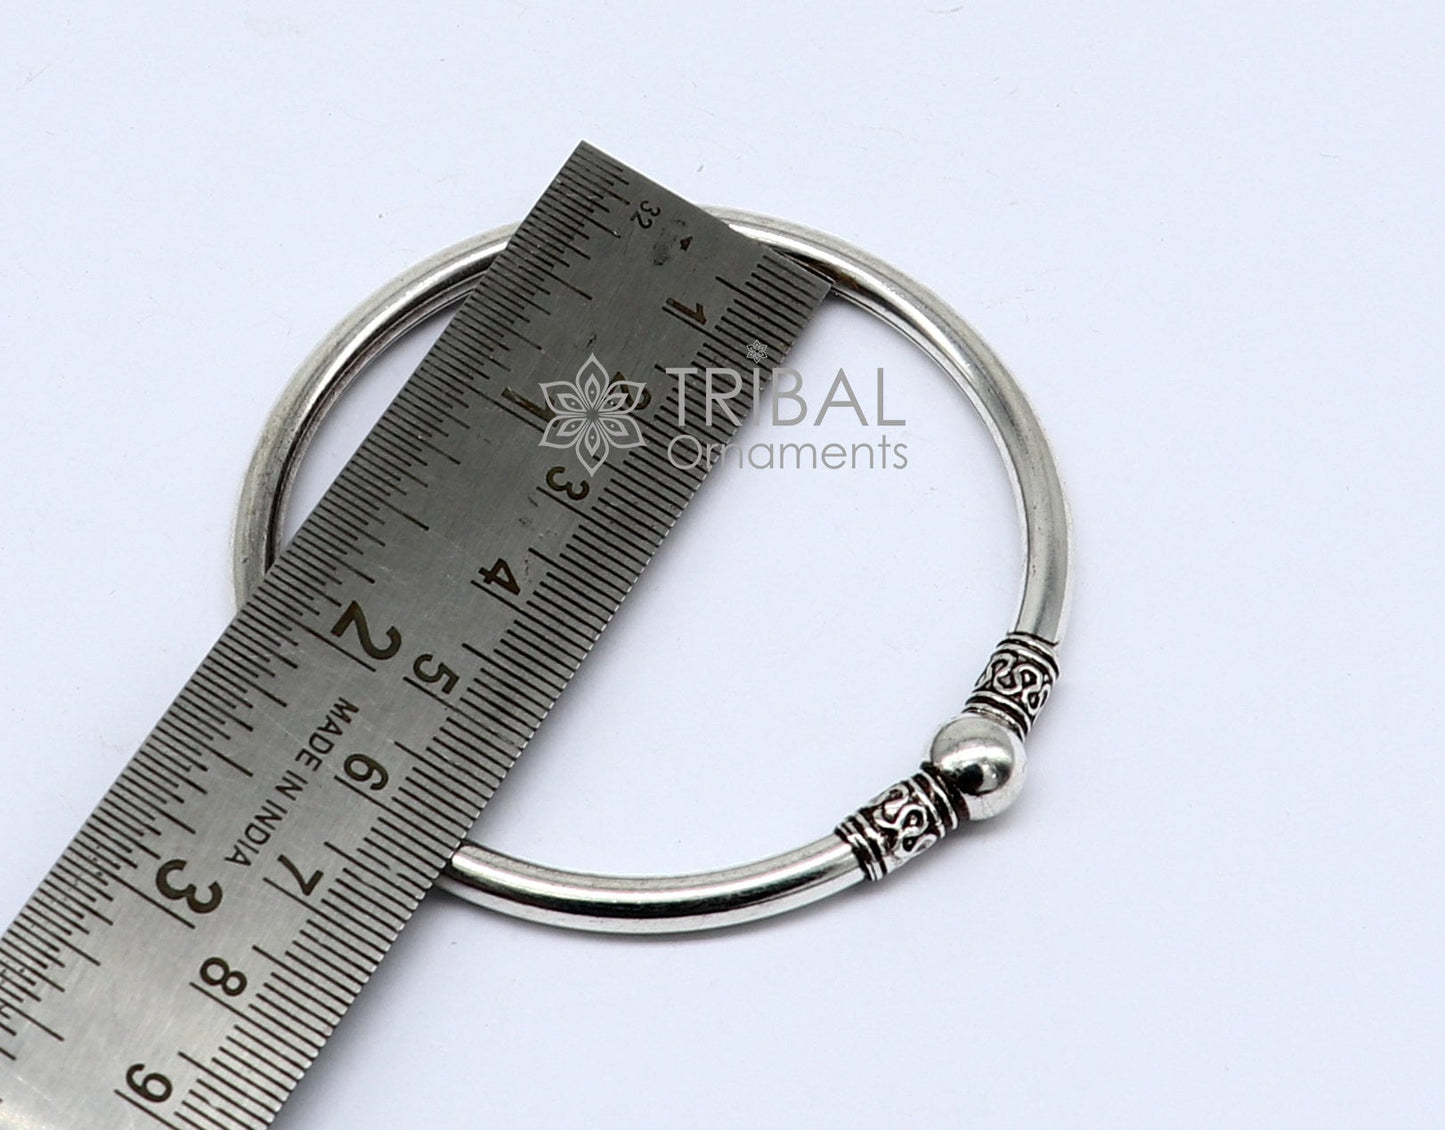 925 sterling silver handmade plain shiny design cultural trendy kada bracelet for both men's and girl's, best delicate wrist jewelry nsk660 - TRIBAL ORNAMENTS